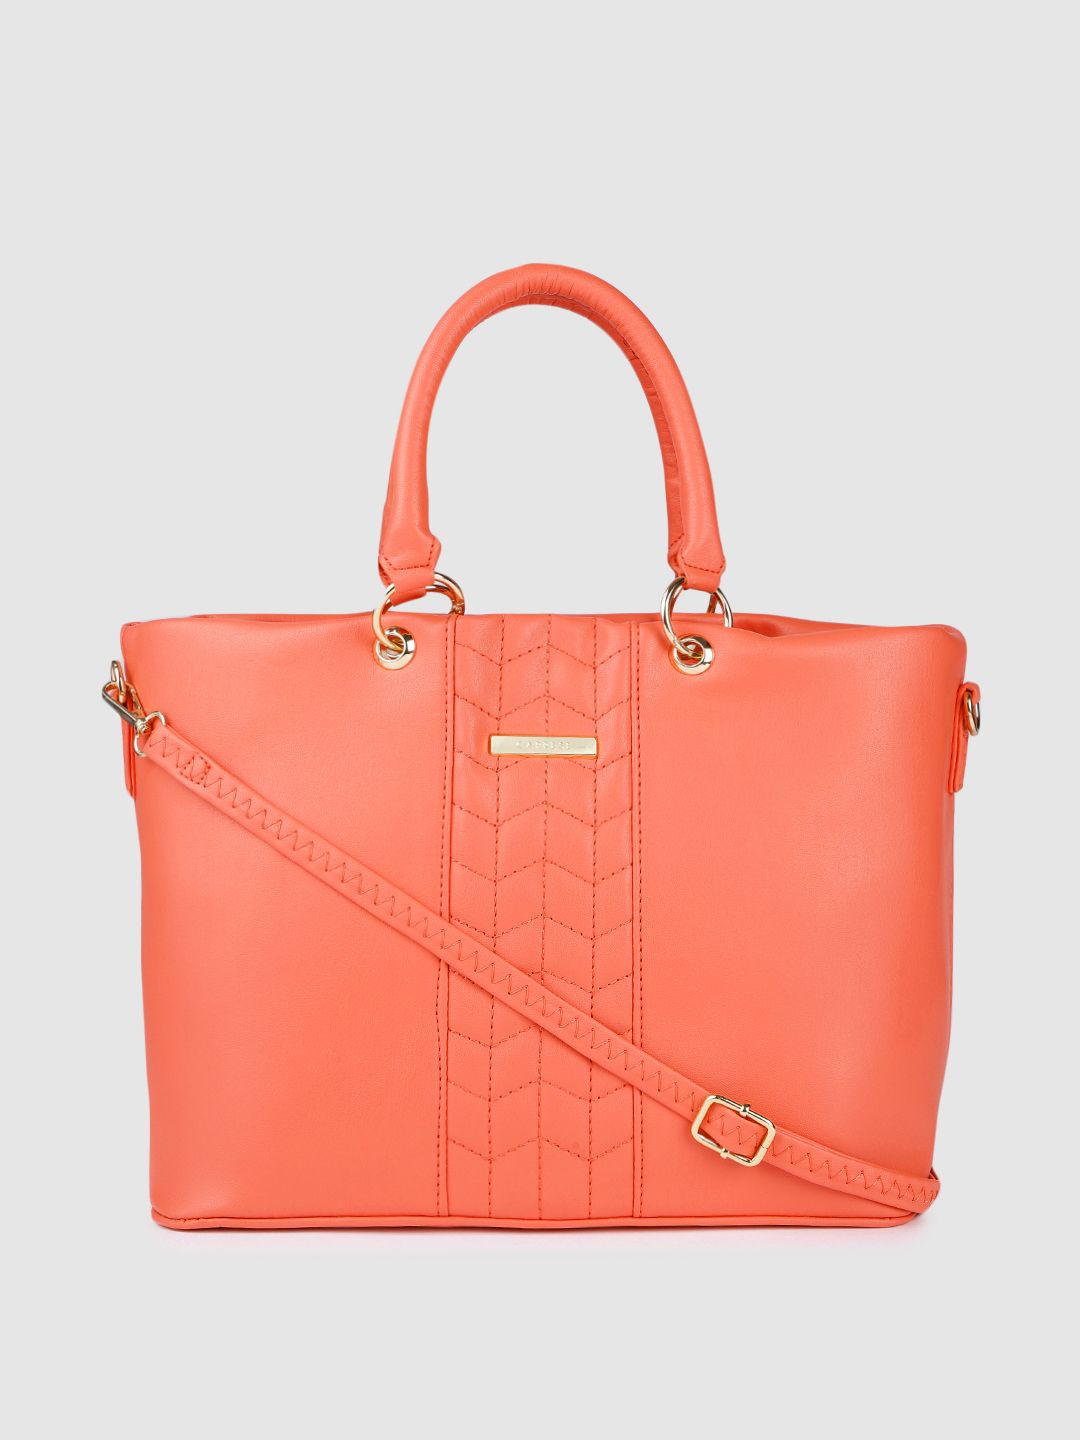 Caprese Coral Leather Handheld Bag Price in India